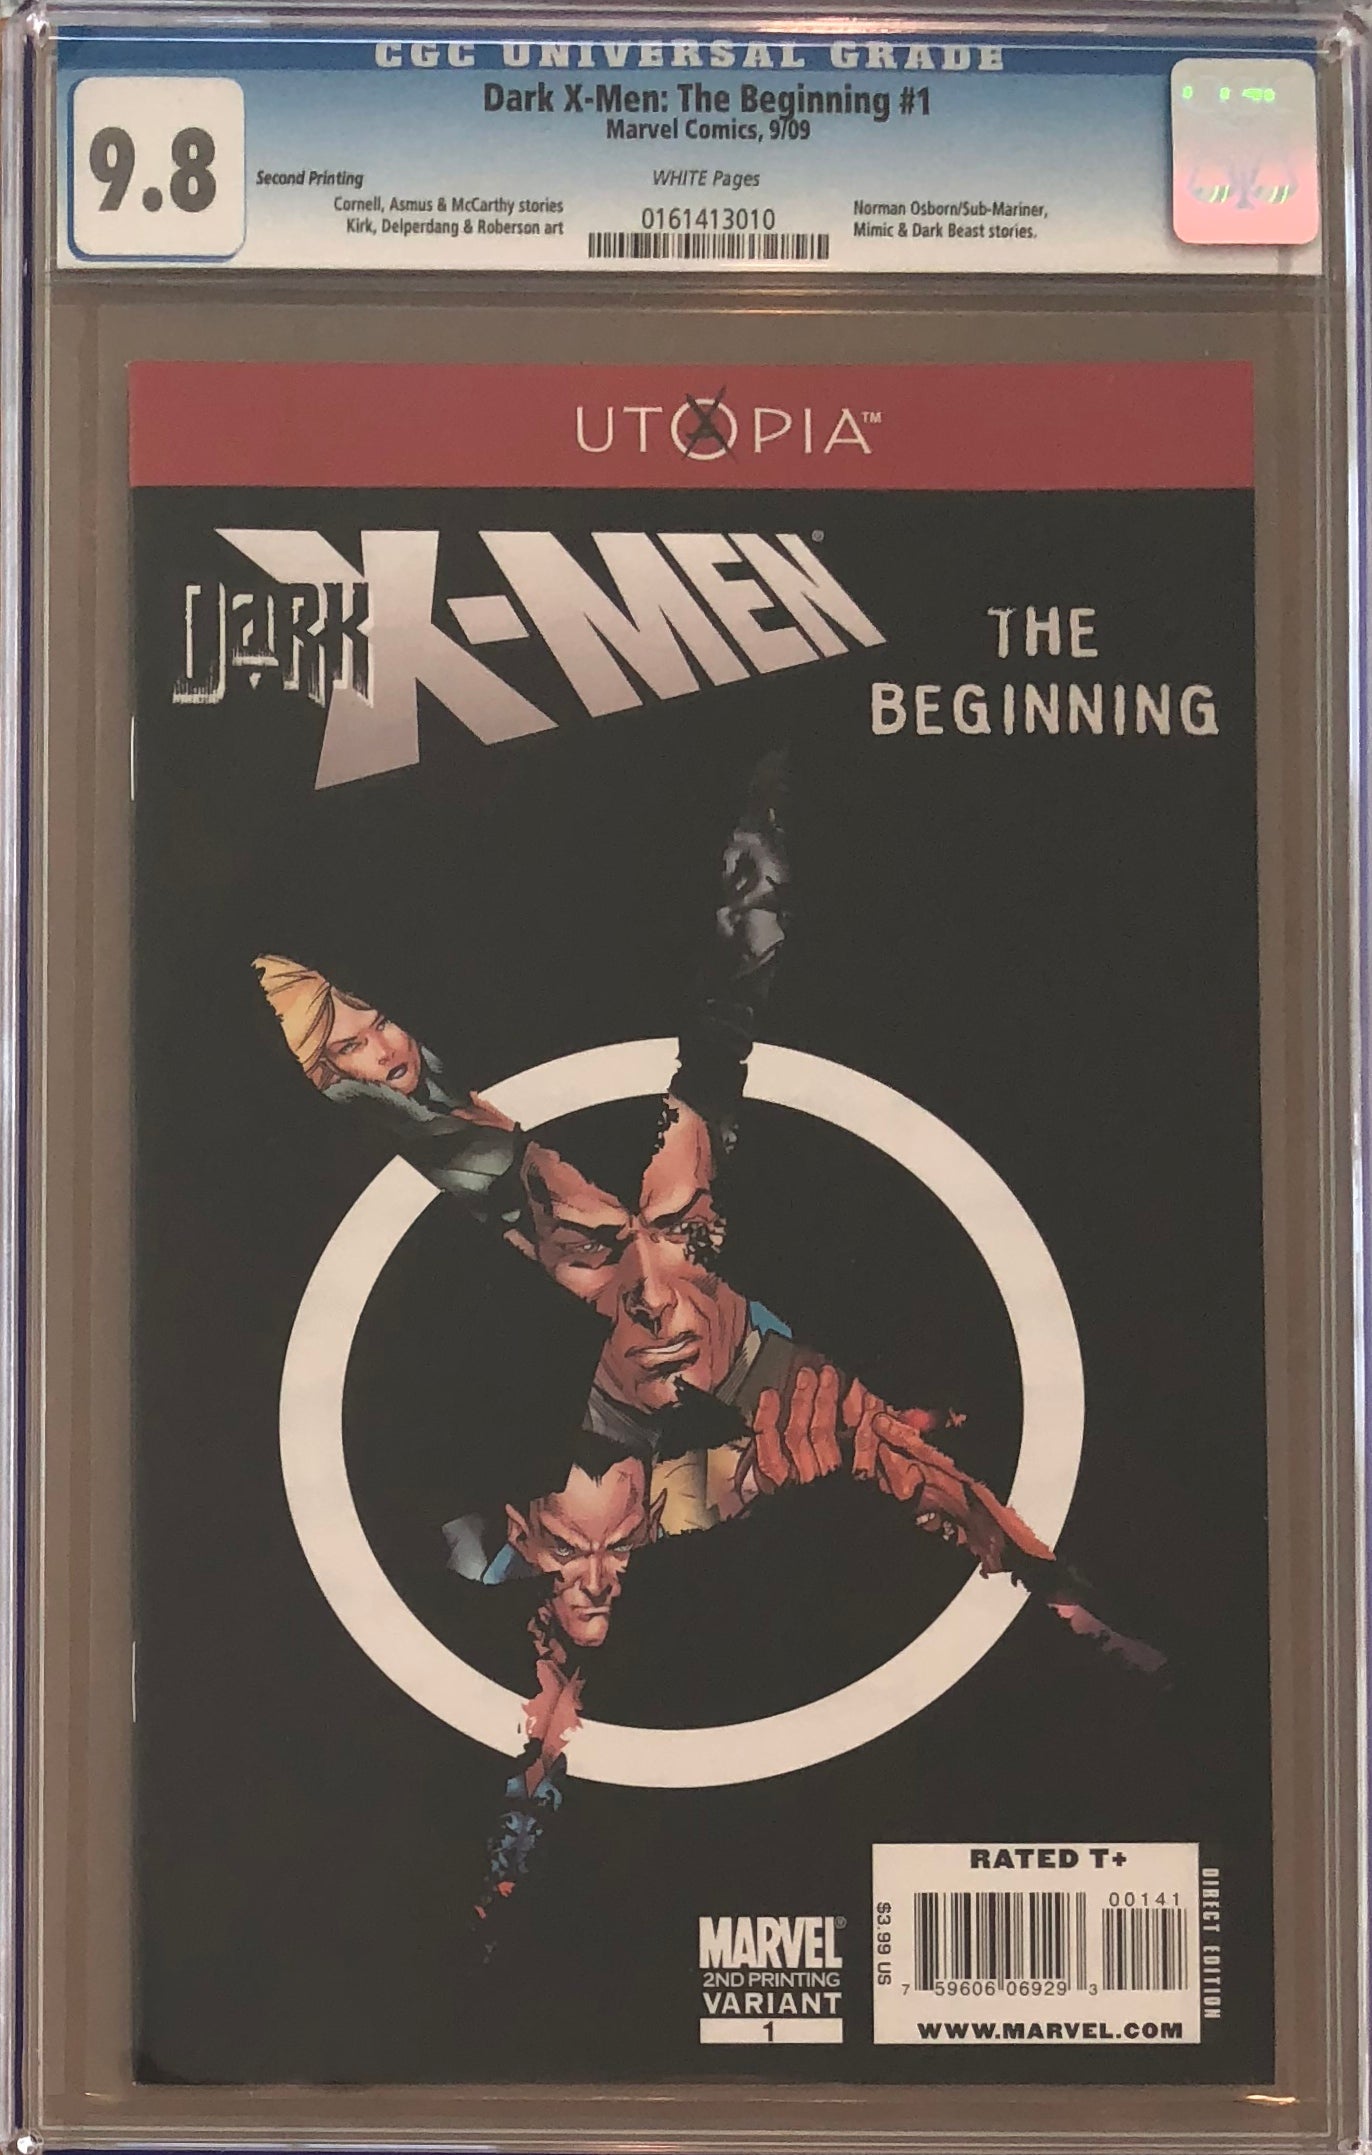 Dark Avengers/Uncanny X-Men: The Beginning #1 Second Printing CGC 9.8